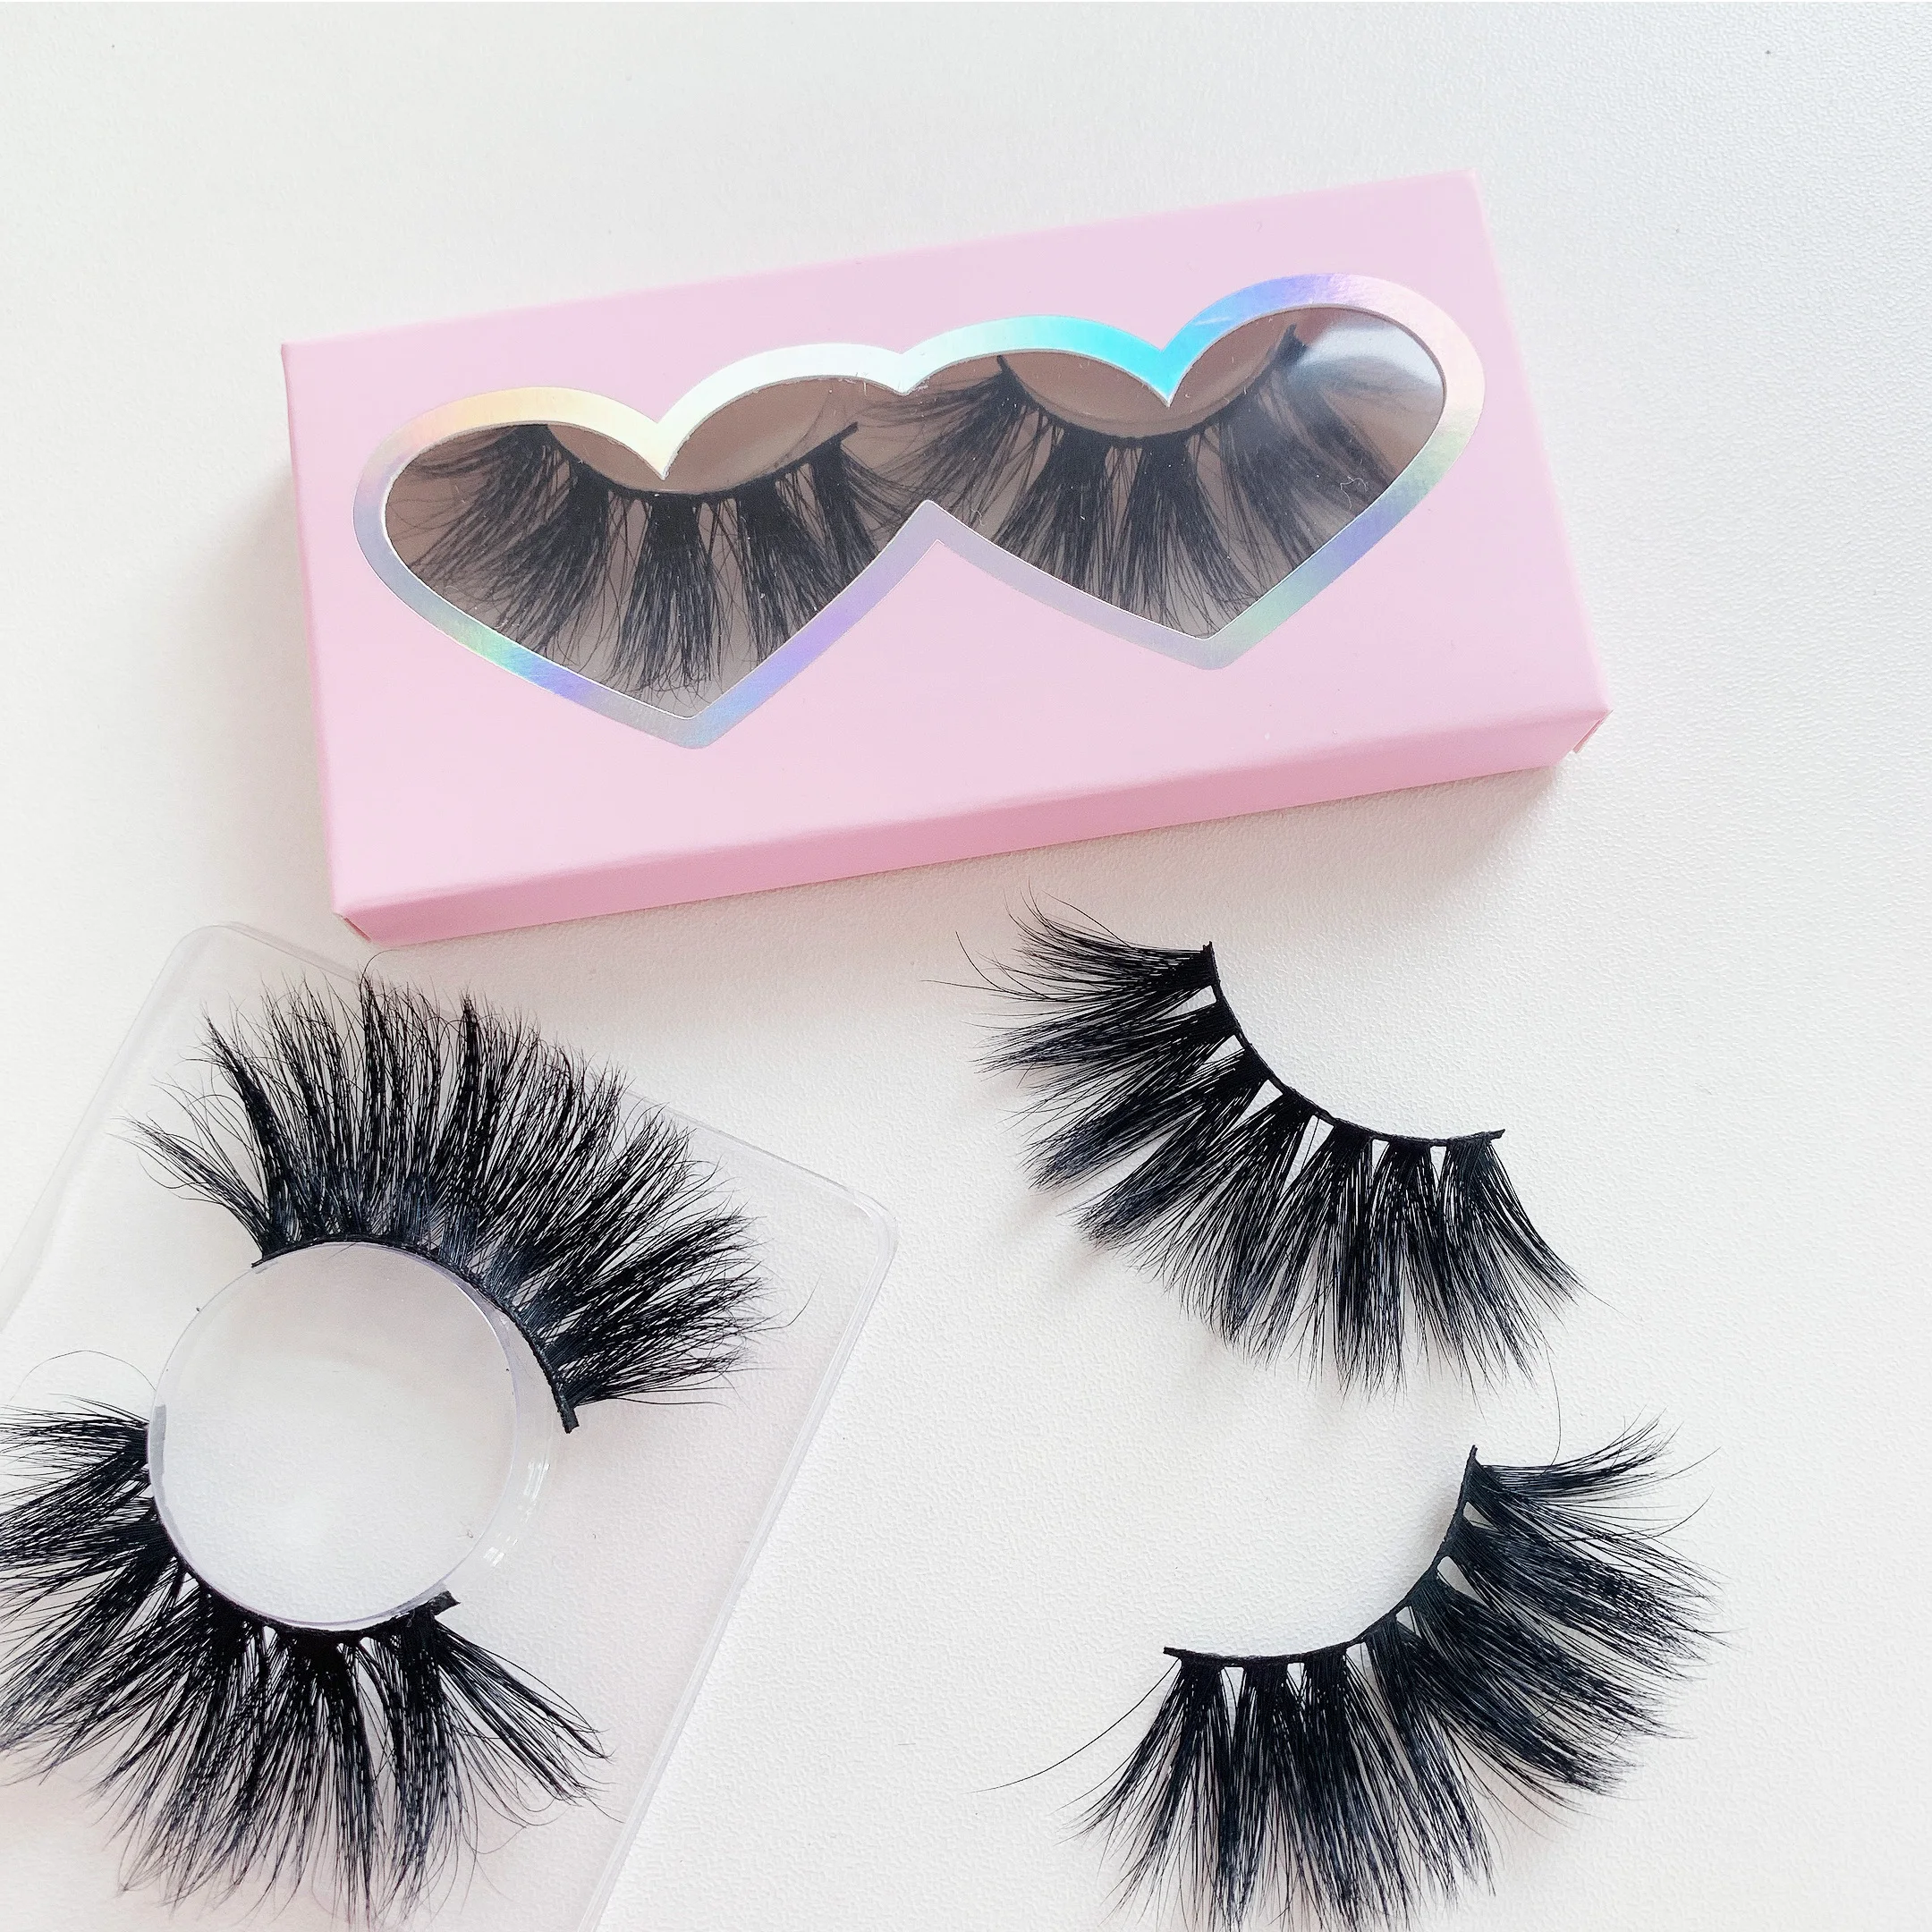 

Strip lashes cases private label eyelash vendor customized boxes18mm faux mink eyelashes, Black color